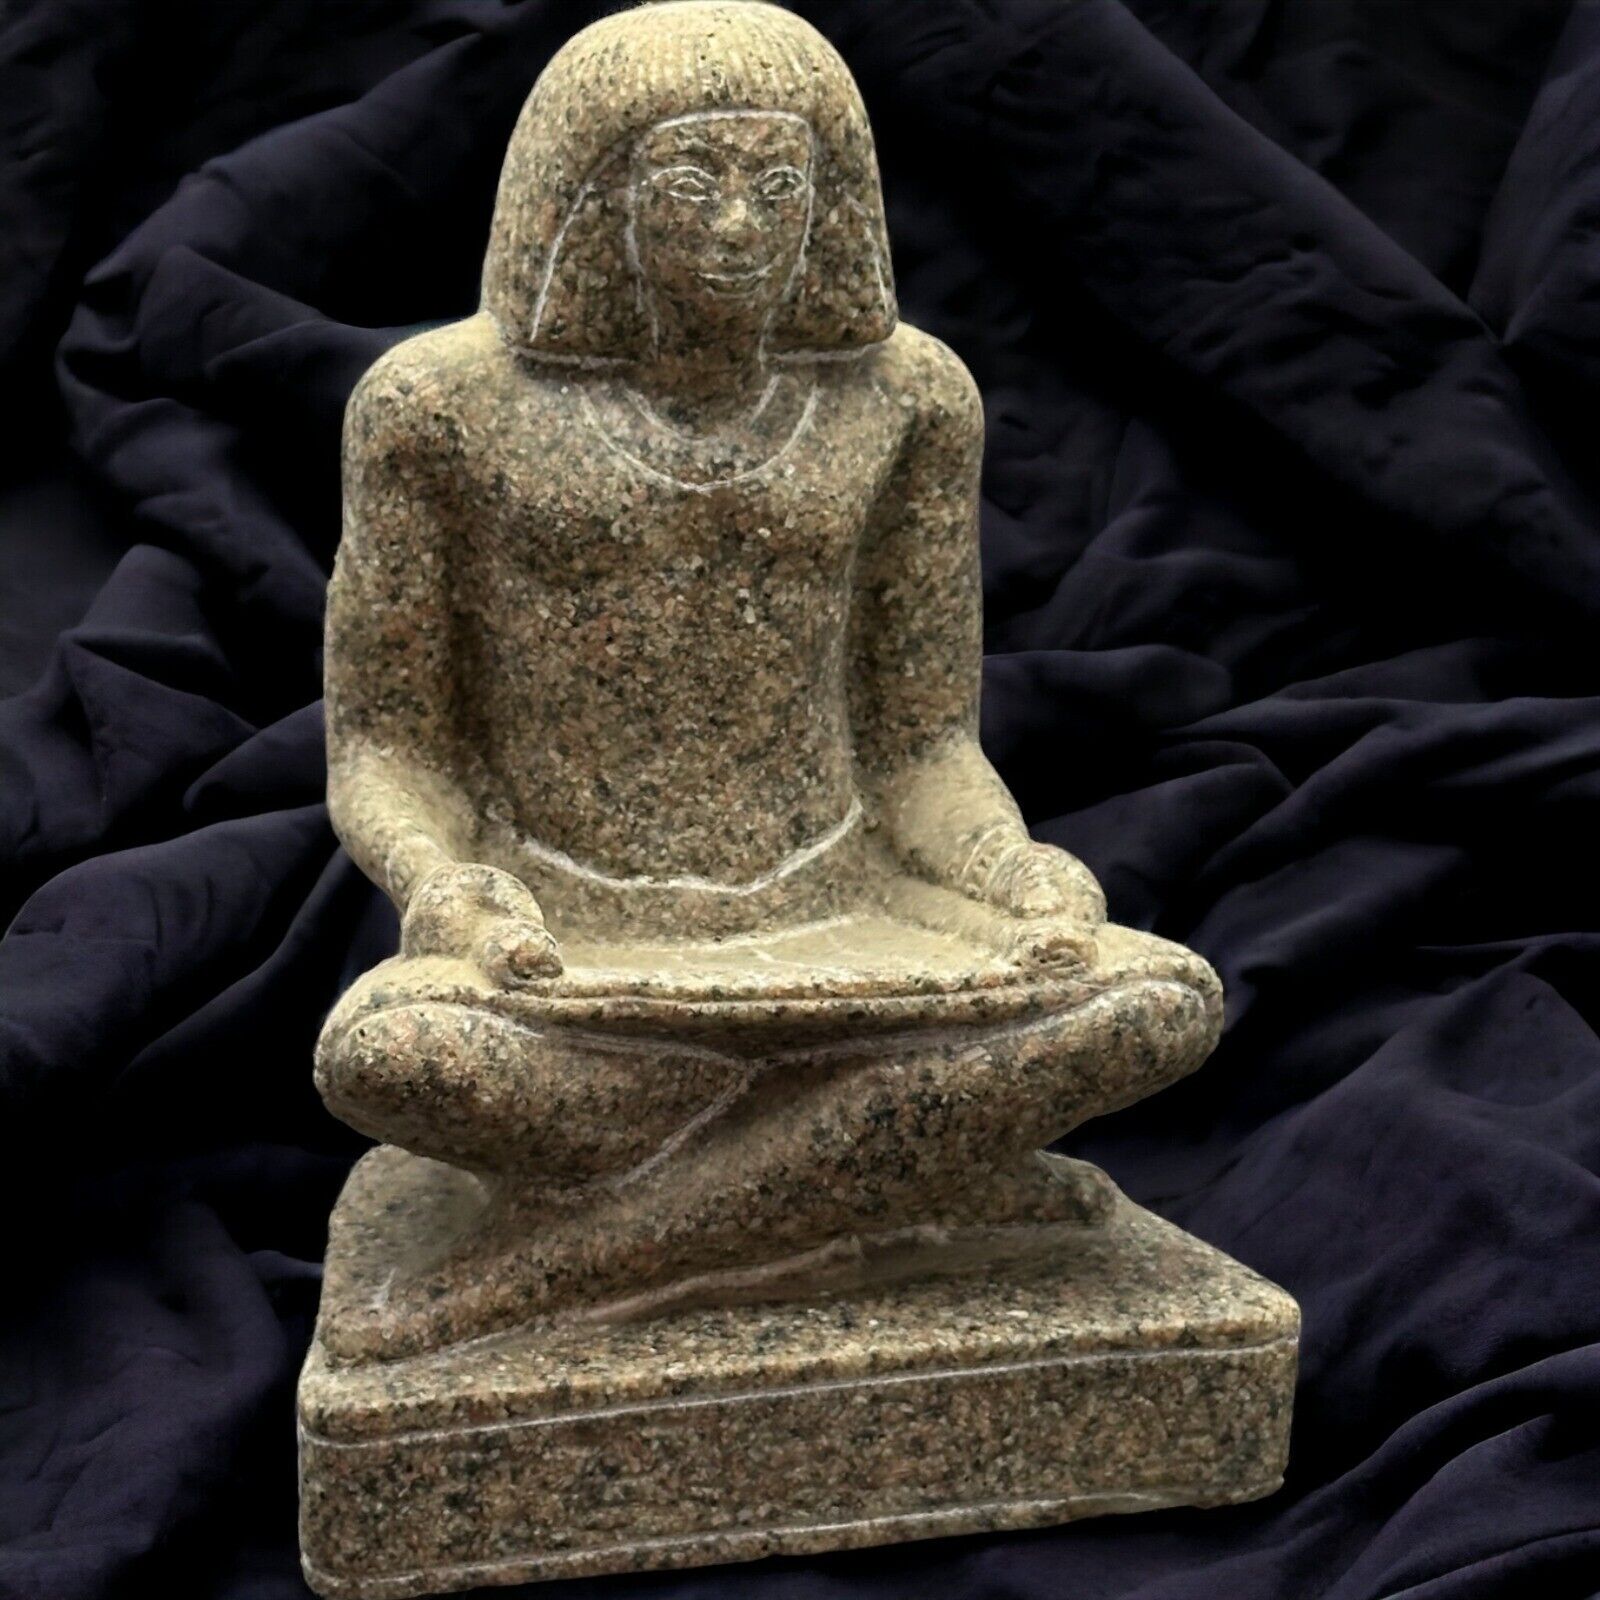 Rare Handmade Egyptian Scribe Statue - Authentic Egyptian Replica Sculpture